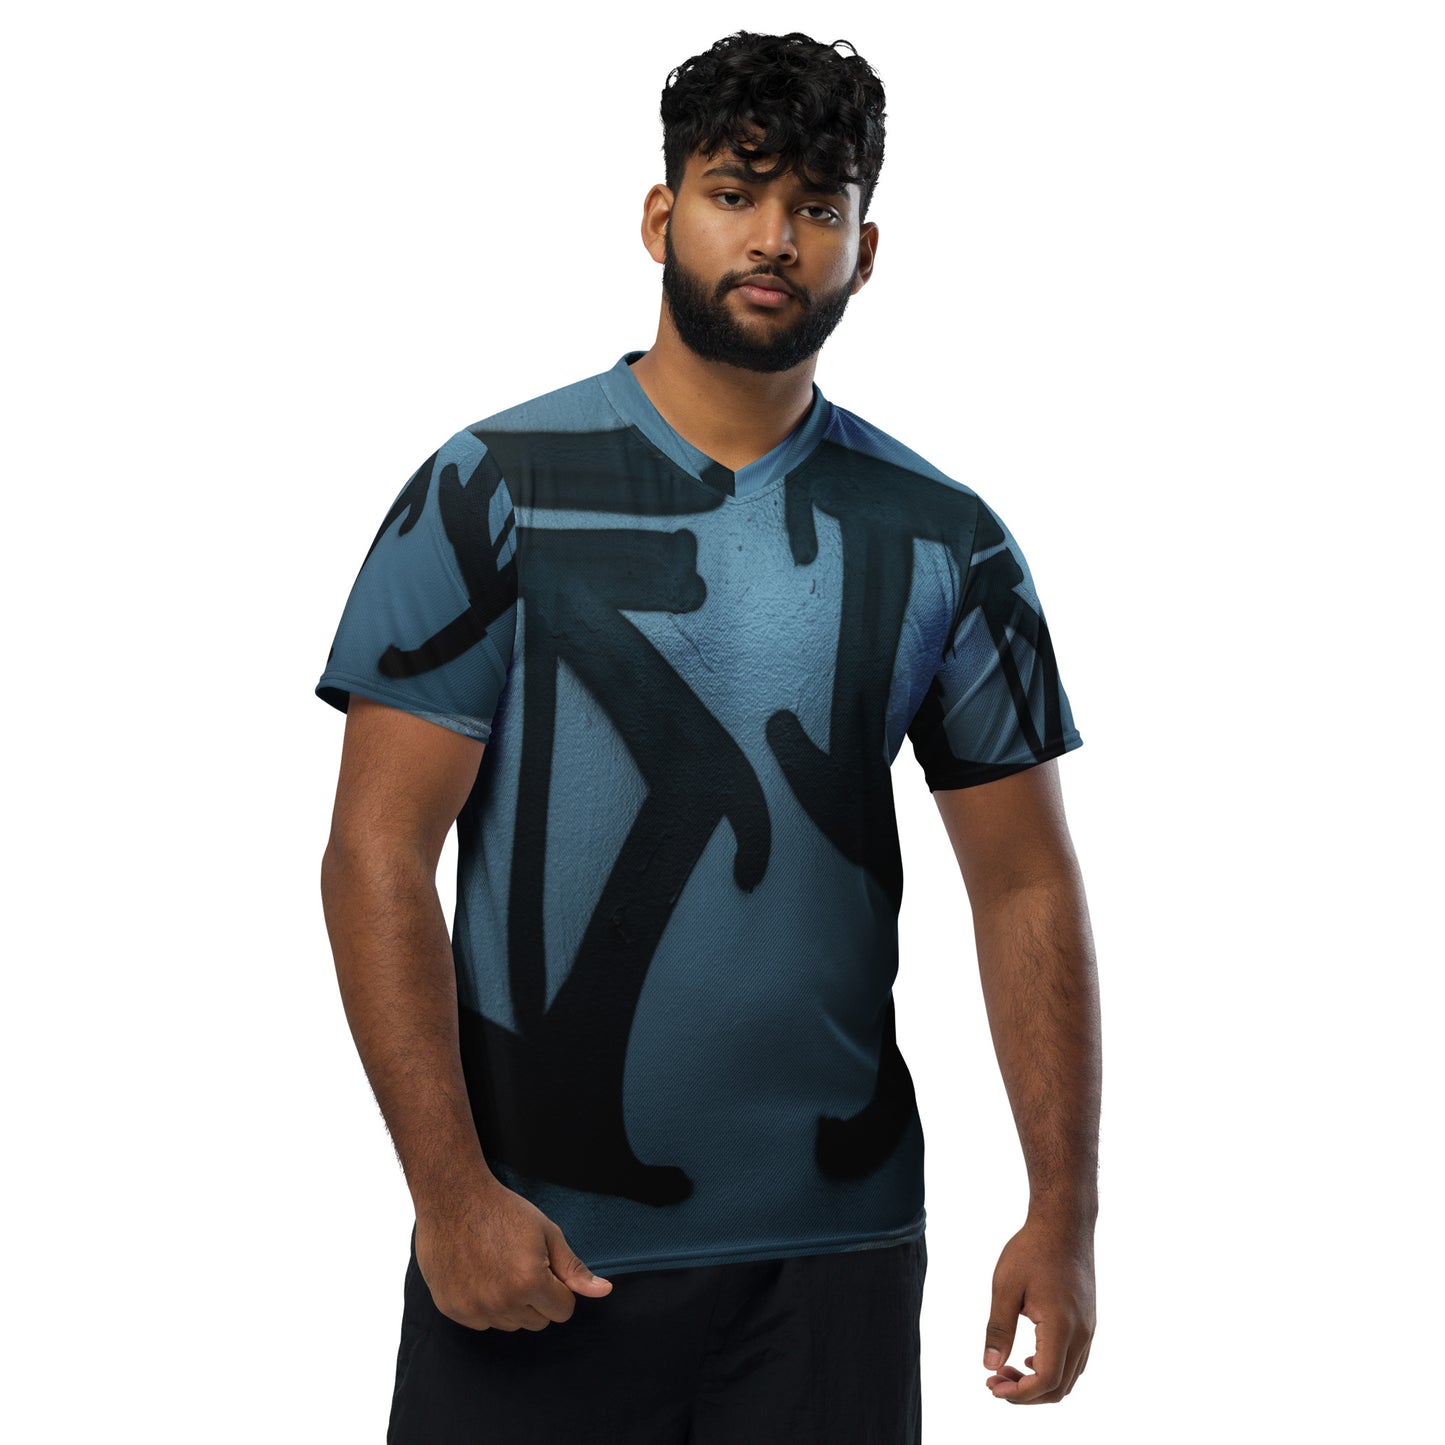 Graffiti X Series, T-shirt, Tee | Recycled Unisex Sports Jersey